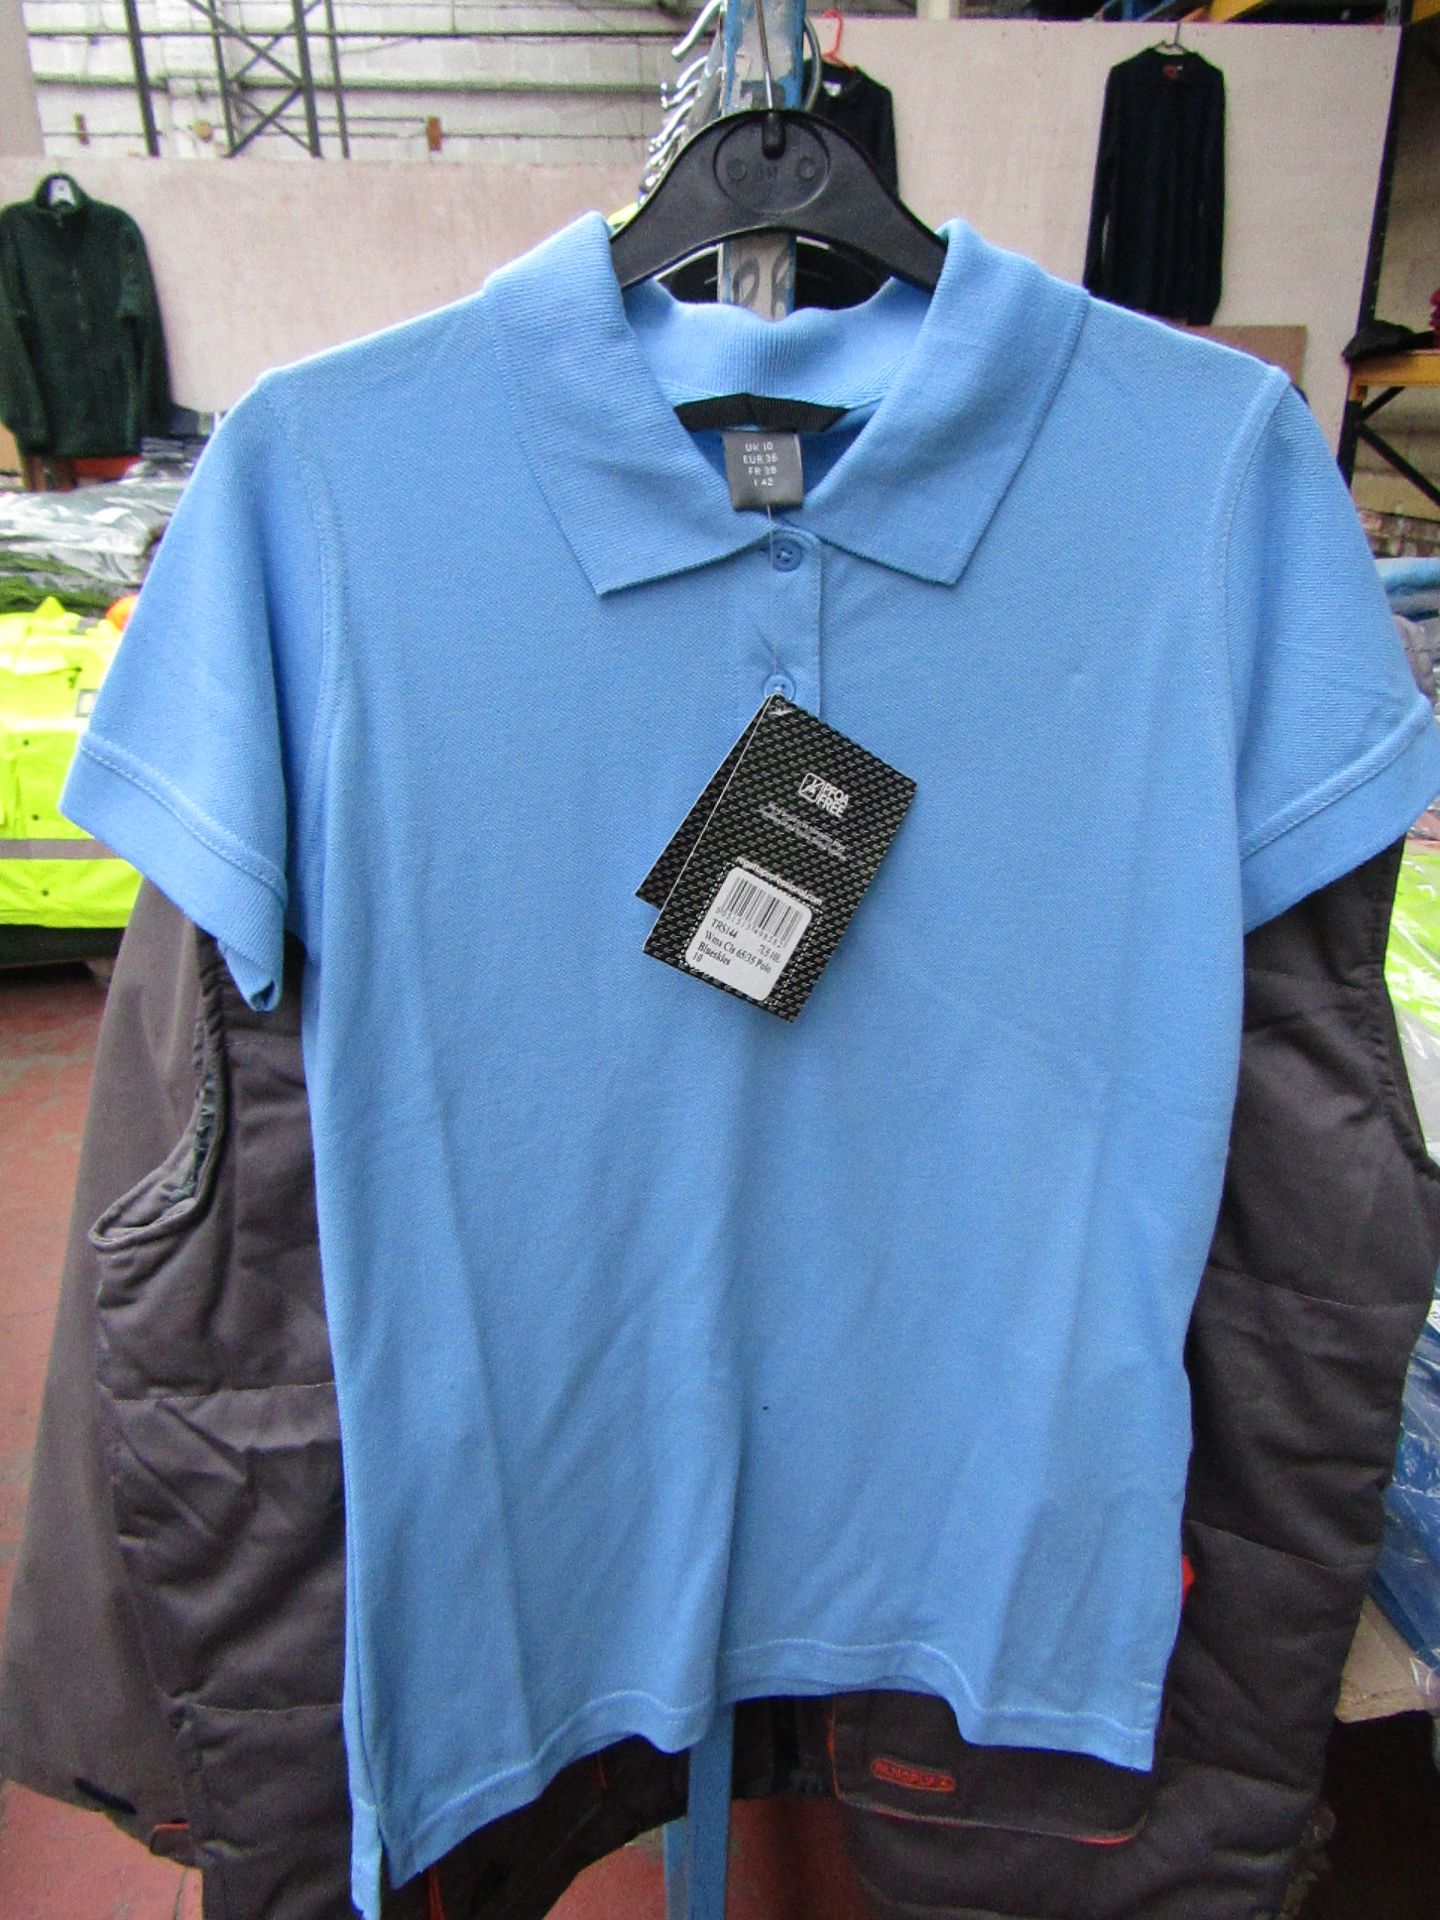 2x Ladies Regatta Blueskies Polo Shirt, Size 14. New in Packaging